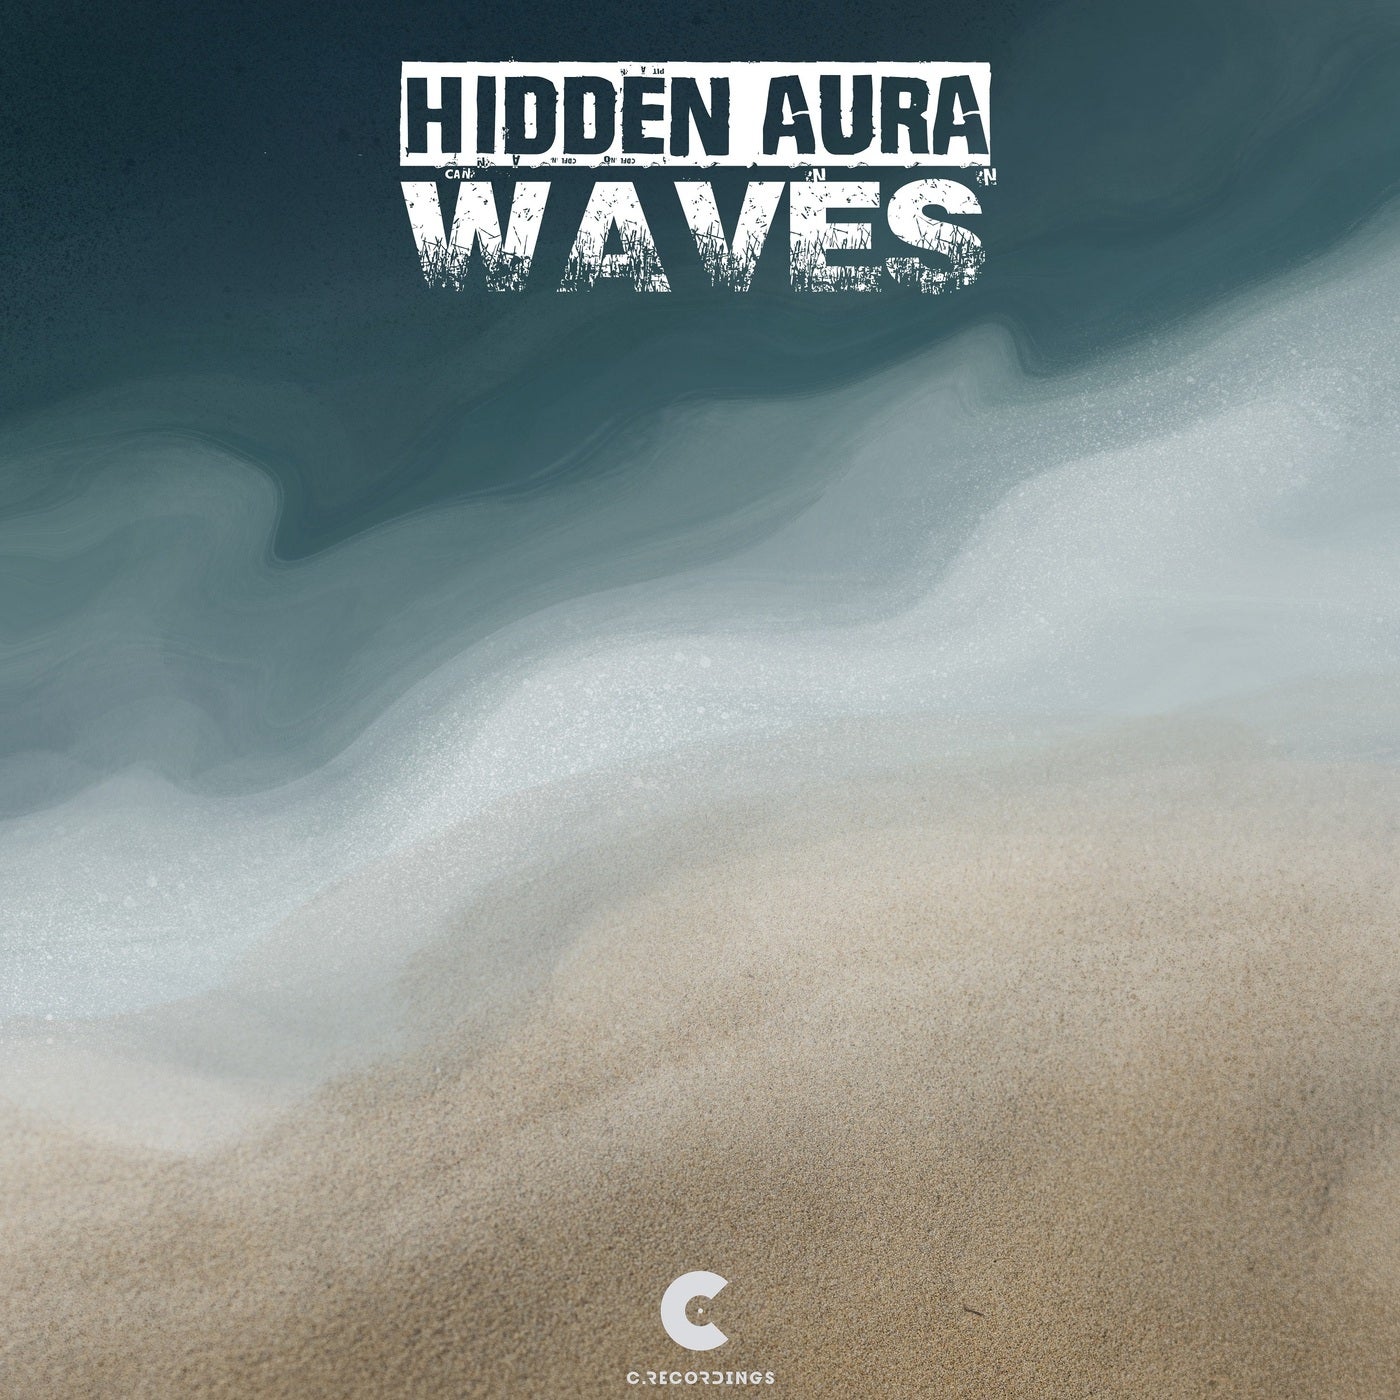 Hidden Aura - Waves , Era [C Recordings]